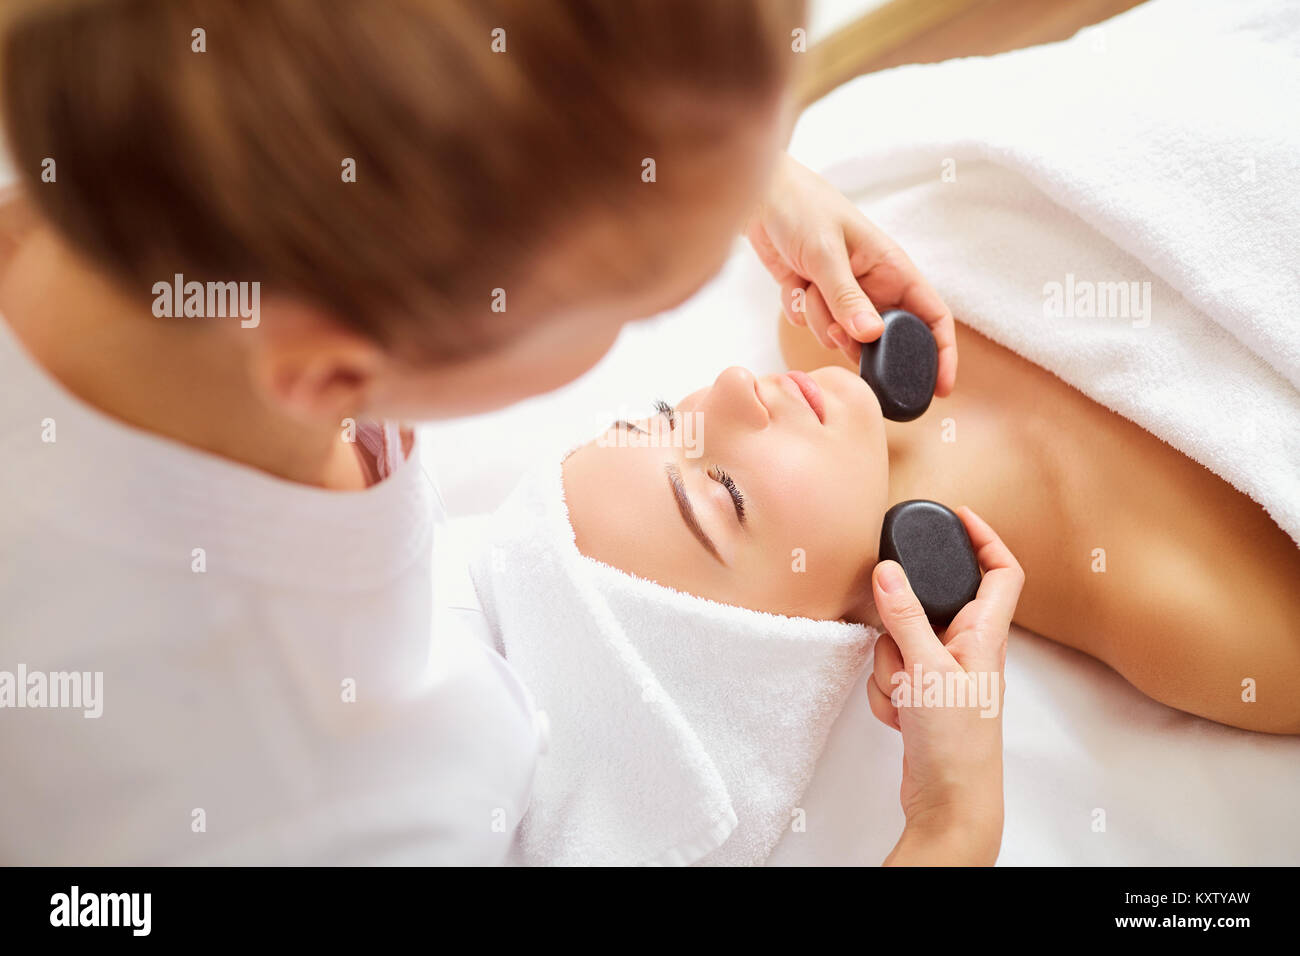 Massage face woman stone therapy. Stock Photo